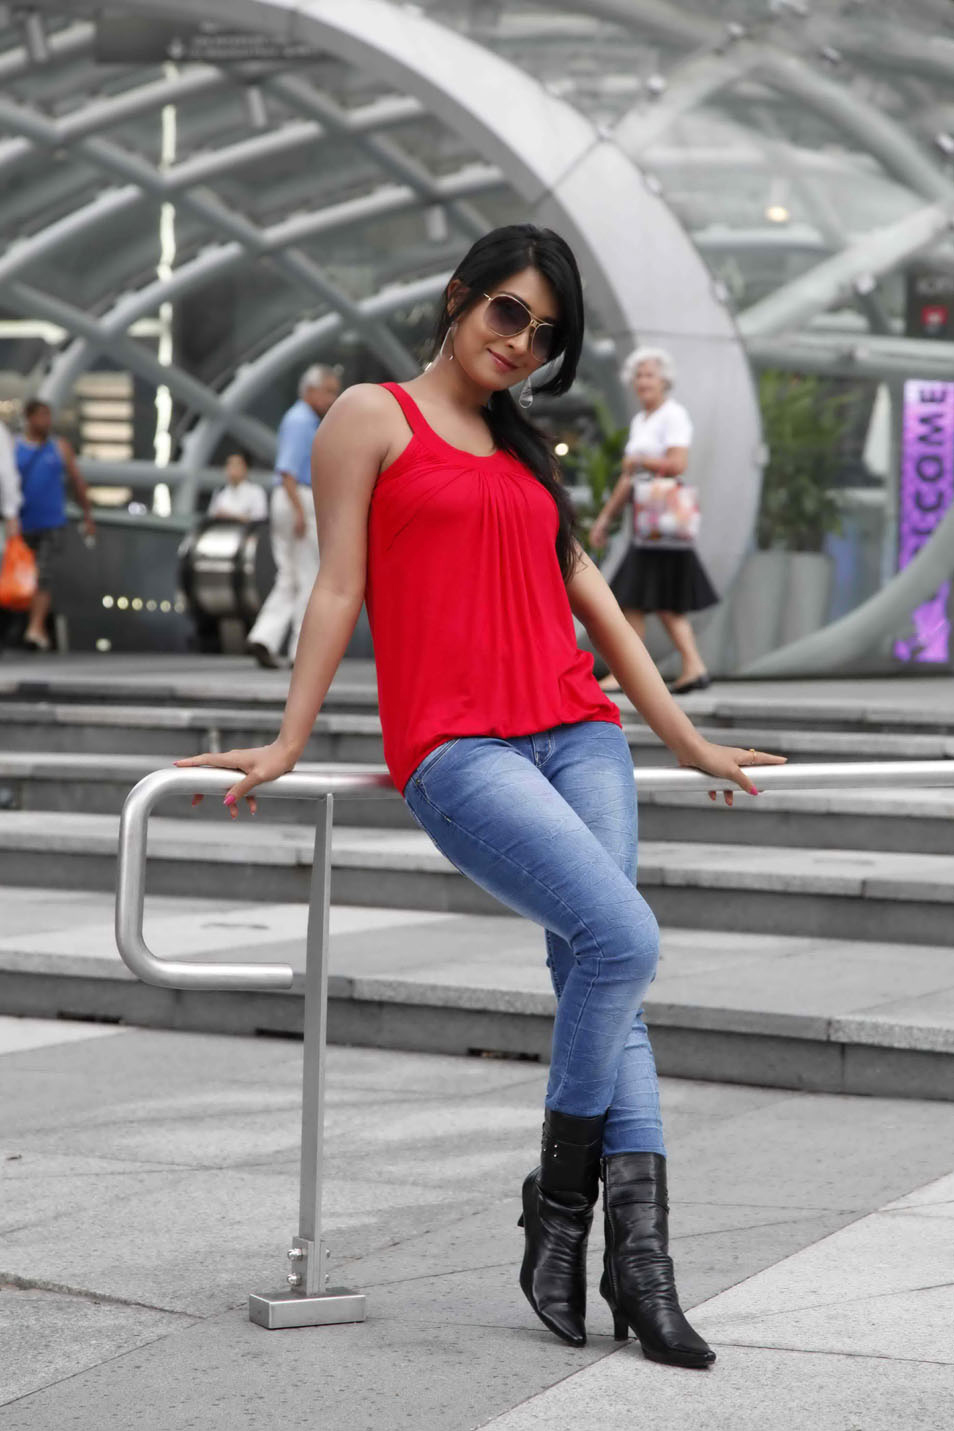 Radhika Pandit Vs Sai Pallavi: Who According To You Have The Best Fashion Sense? | IWMBuzz